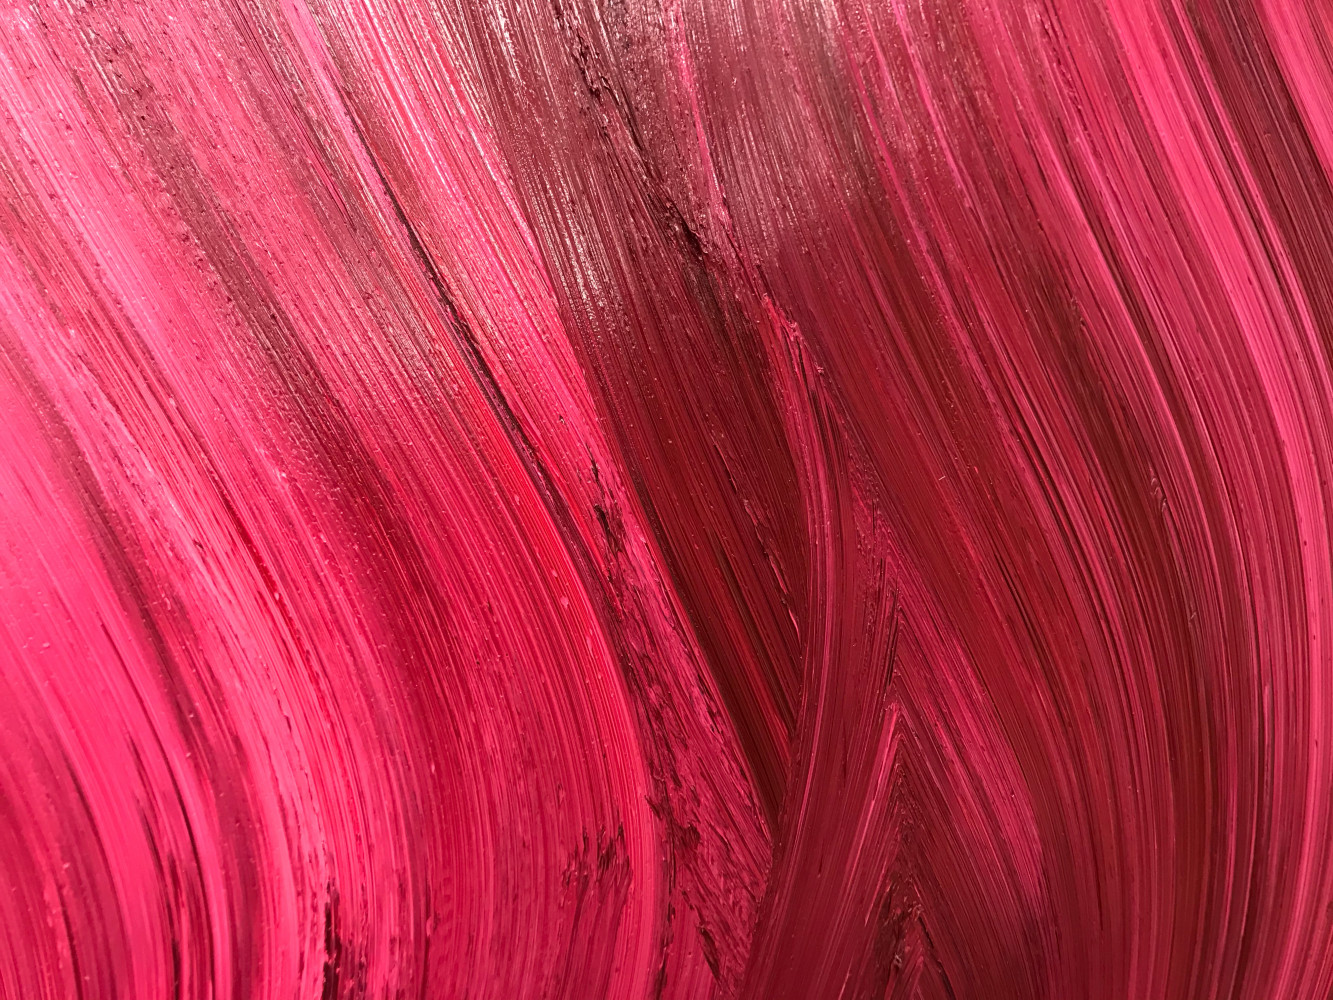 Jason Martin, ‘Untitled (Brilliant pink / Ideal rose) (detail)’, 2020